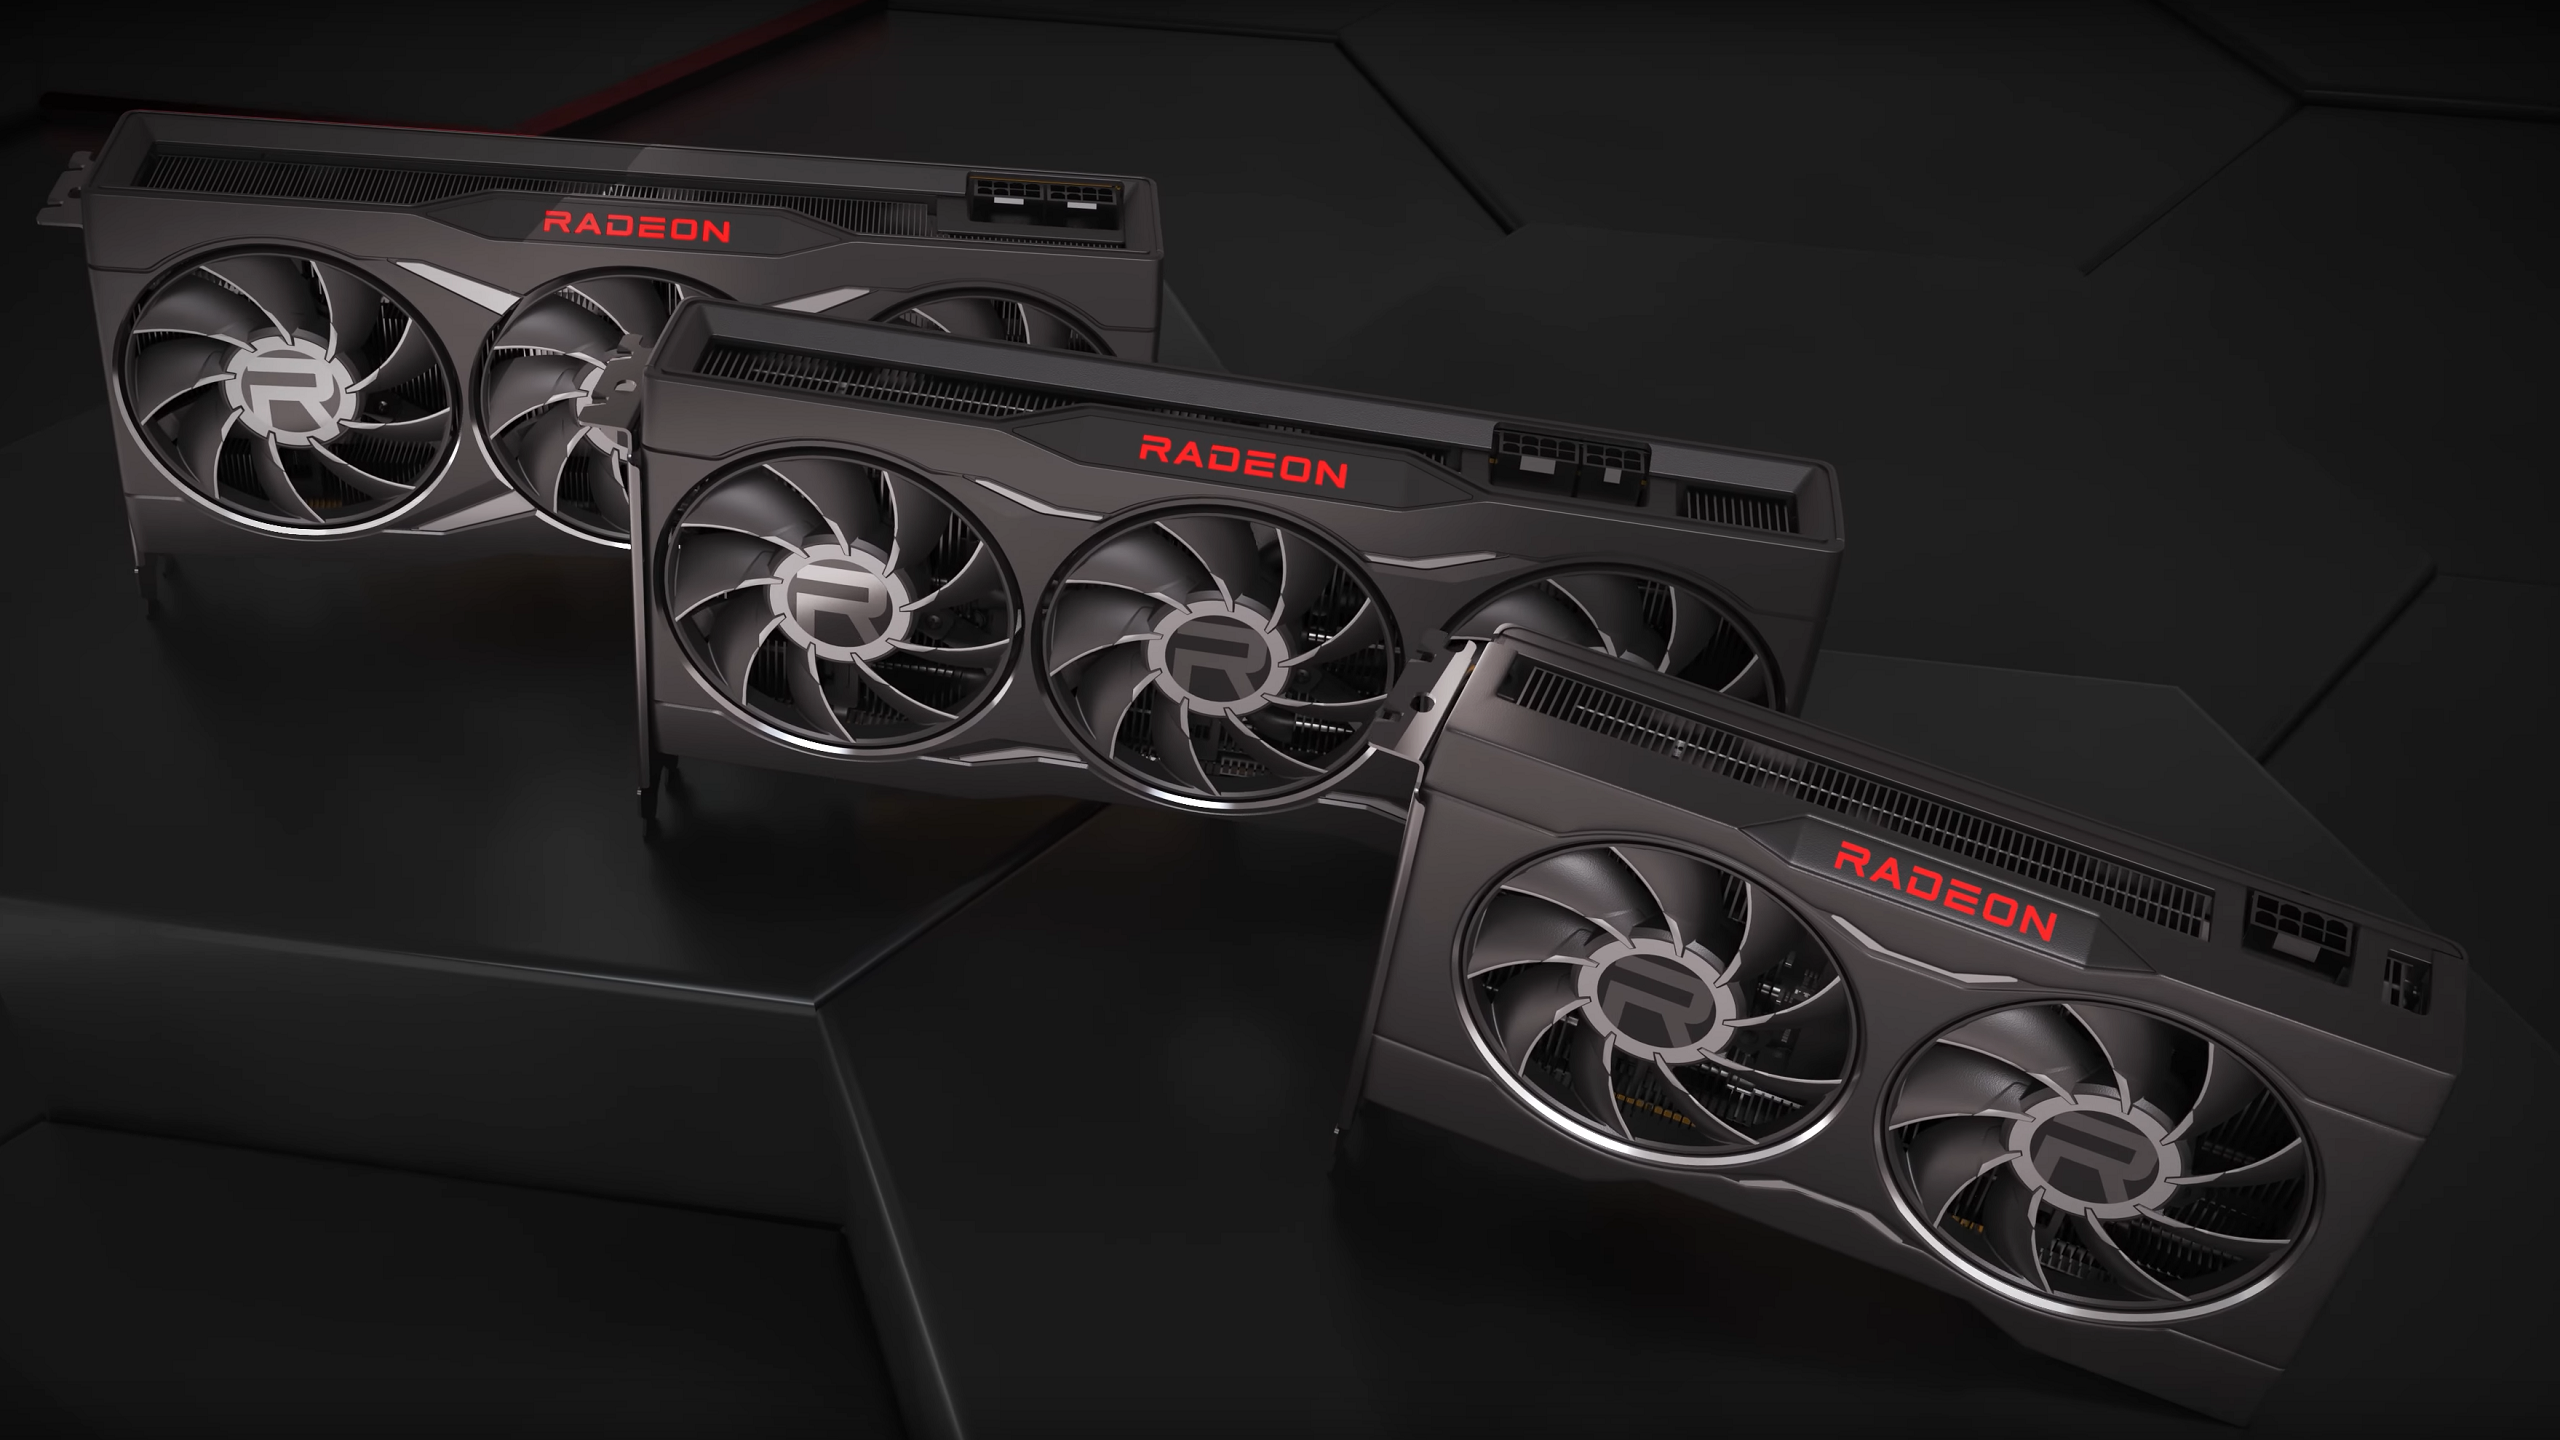 Renders of the AMD Radeon RX 6650 XT, Radeon RX 6750 XT and Radeon RX 6950 XT graphics cards on a black platform.